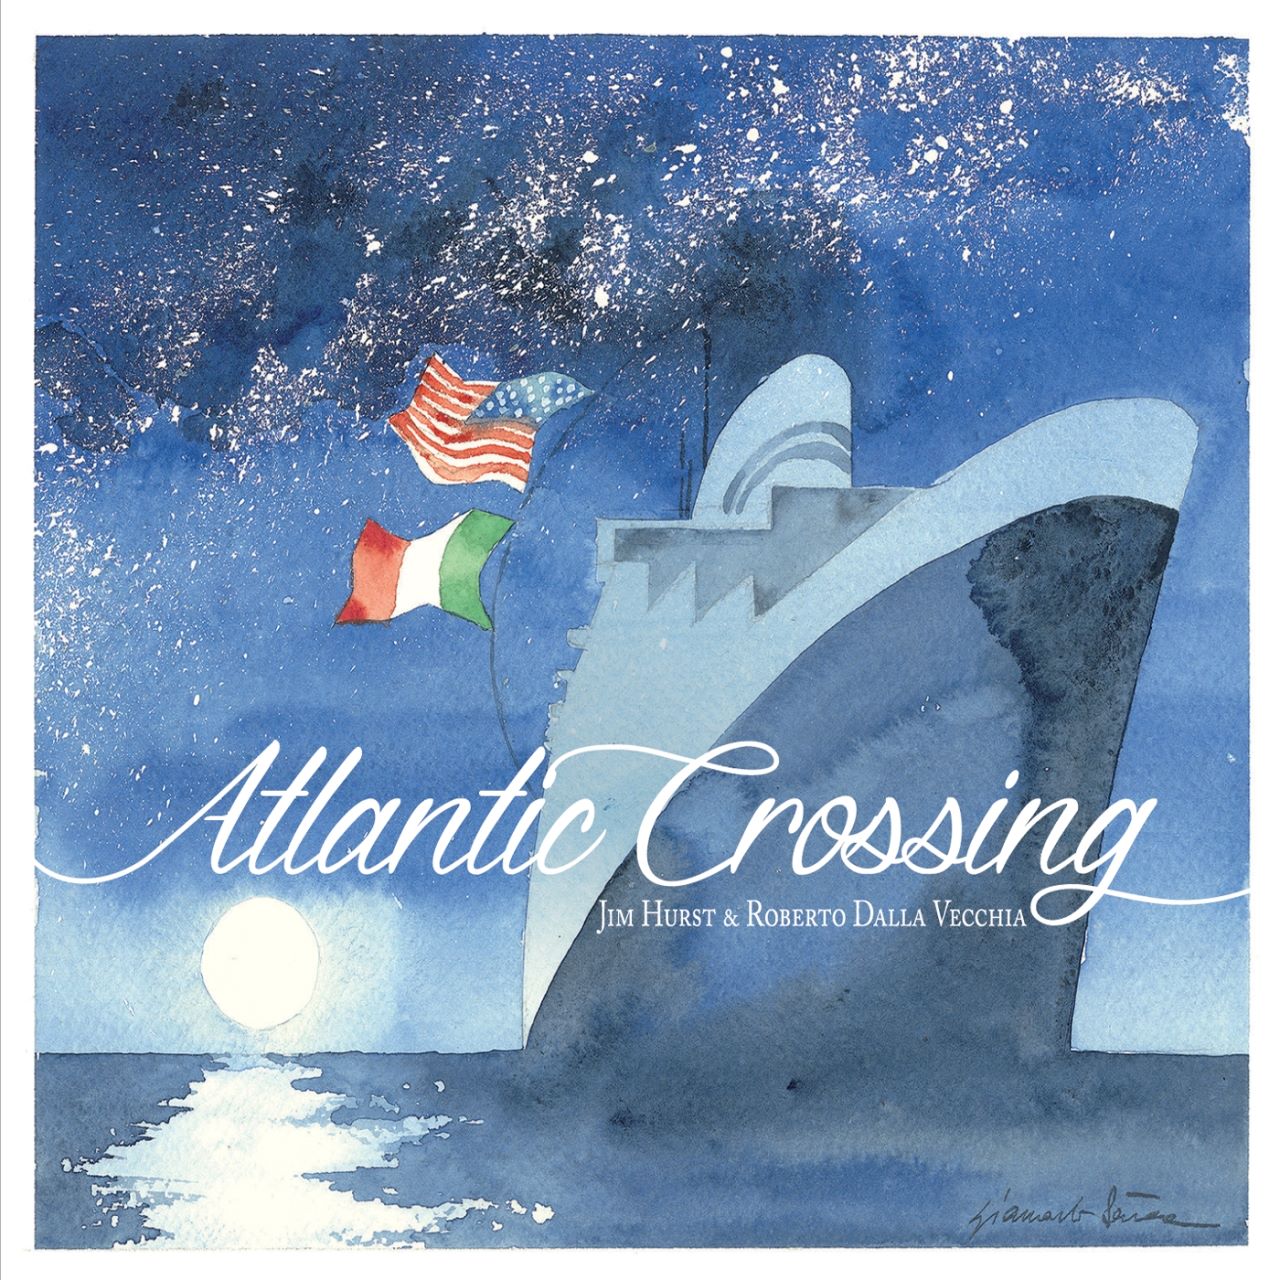 Jim Hurst & Roberto Dalla Vecchia – Atlantic Crossing cover album